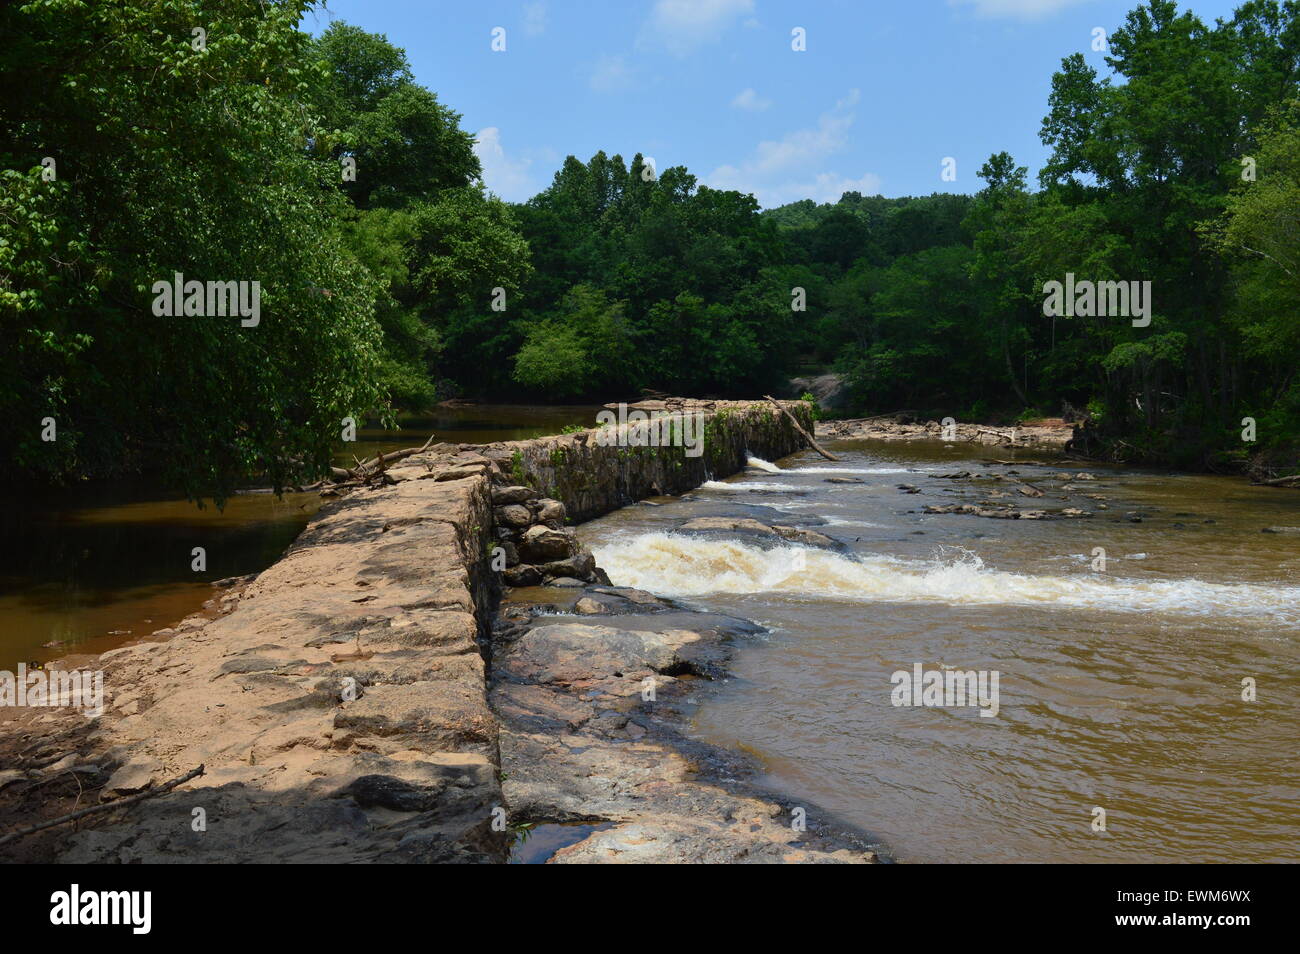 Dam blocking the flow of water Stock Photo